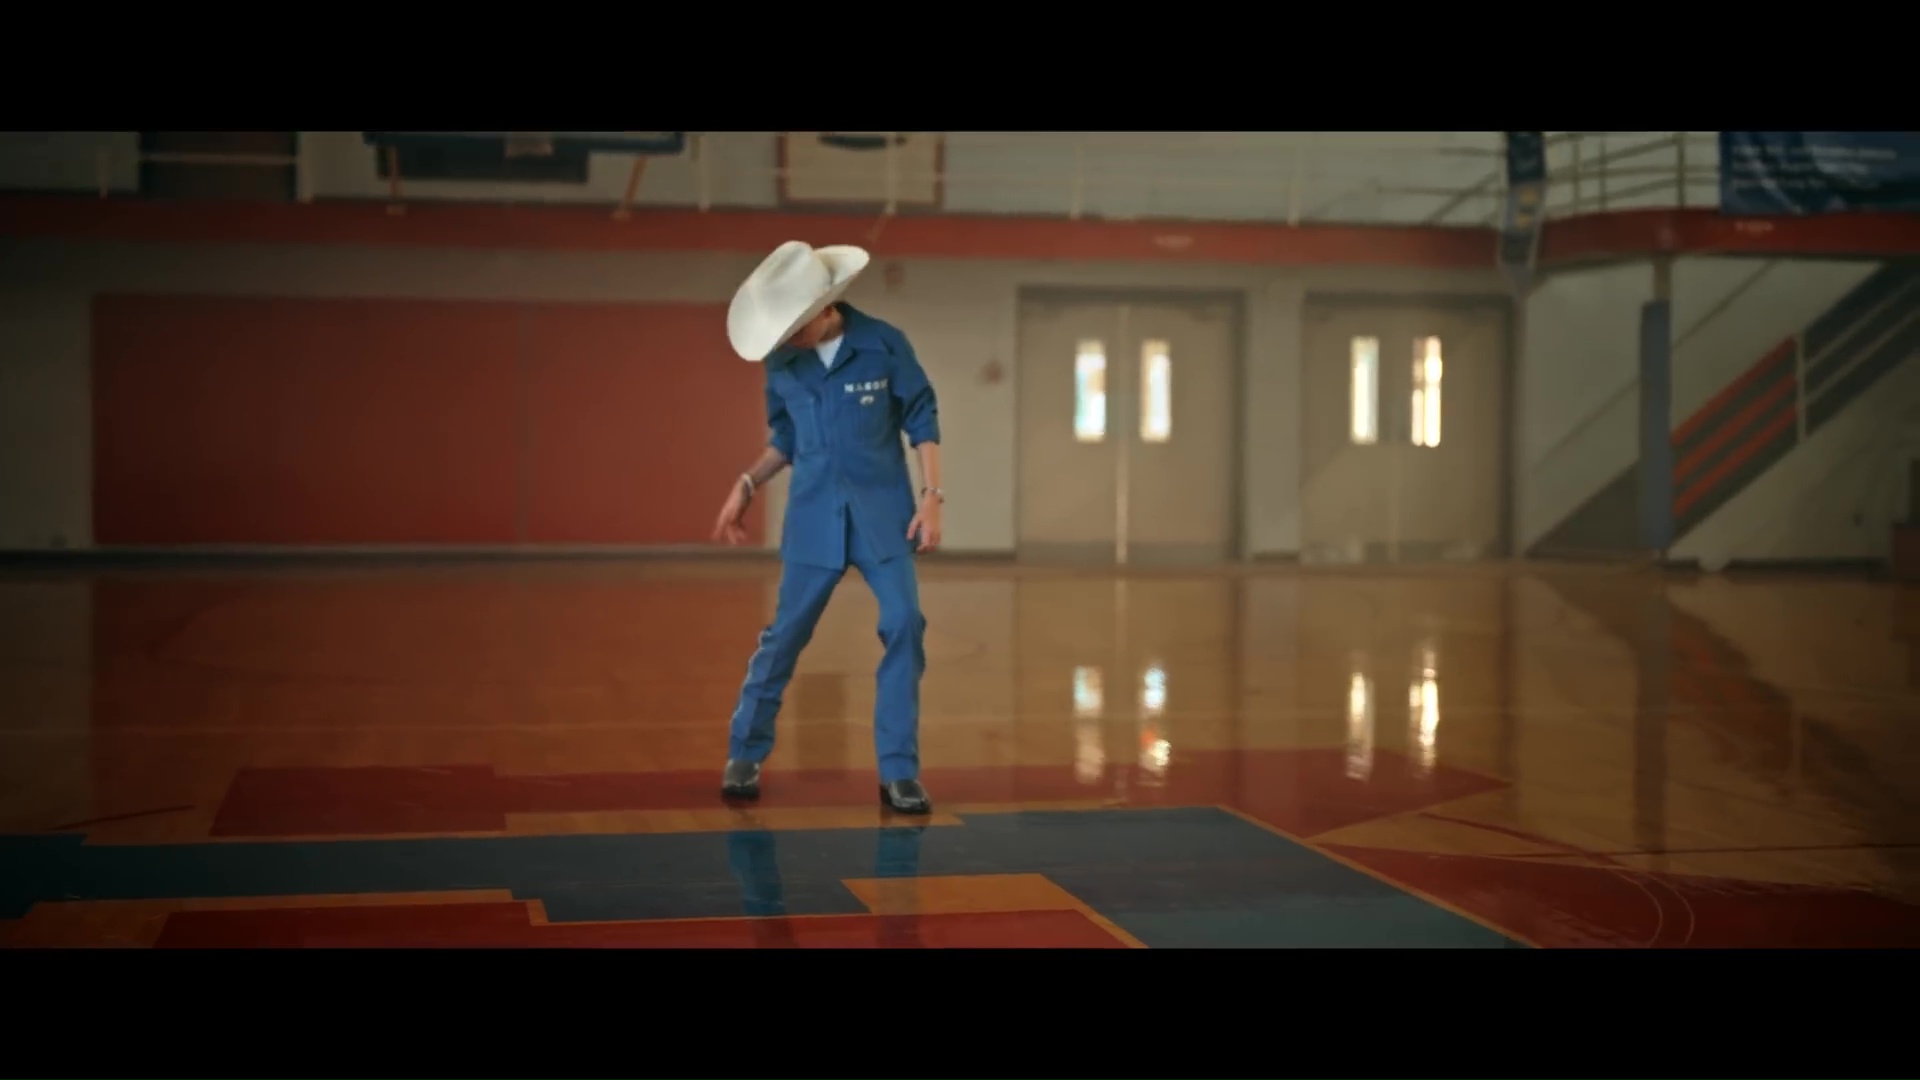 Mason Ramsey in Music Video: Twang